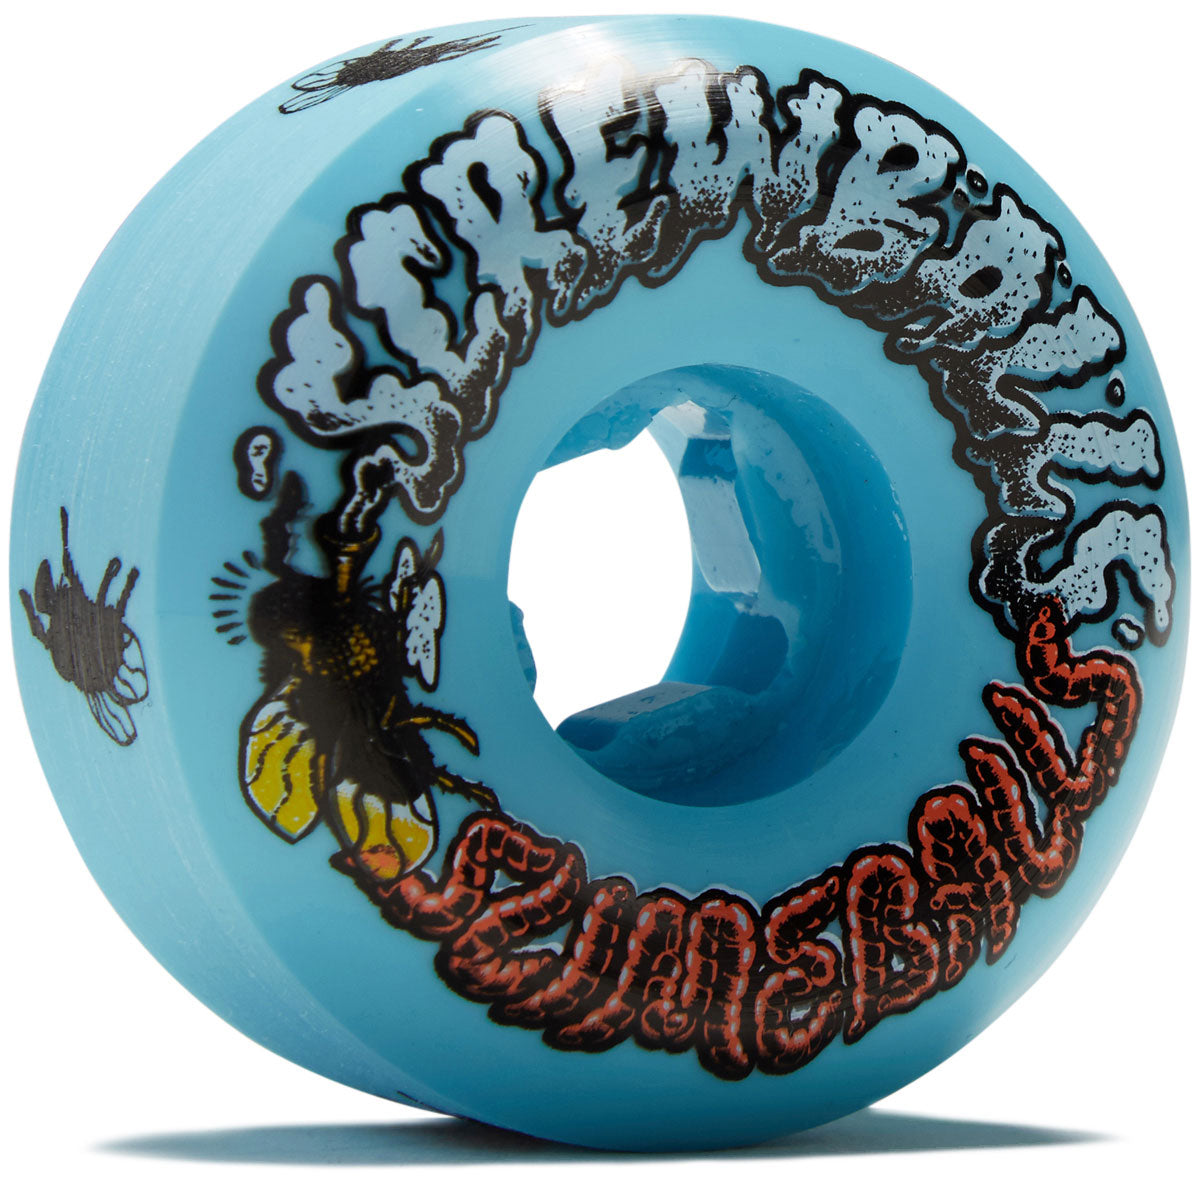 Slime Balls Screw Balls 99a Skateboard Wheels - Blue - 56mm image 1